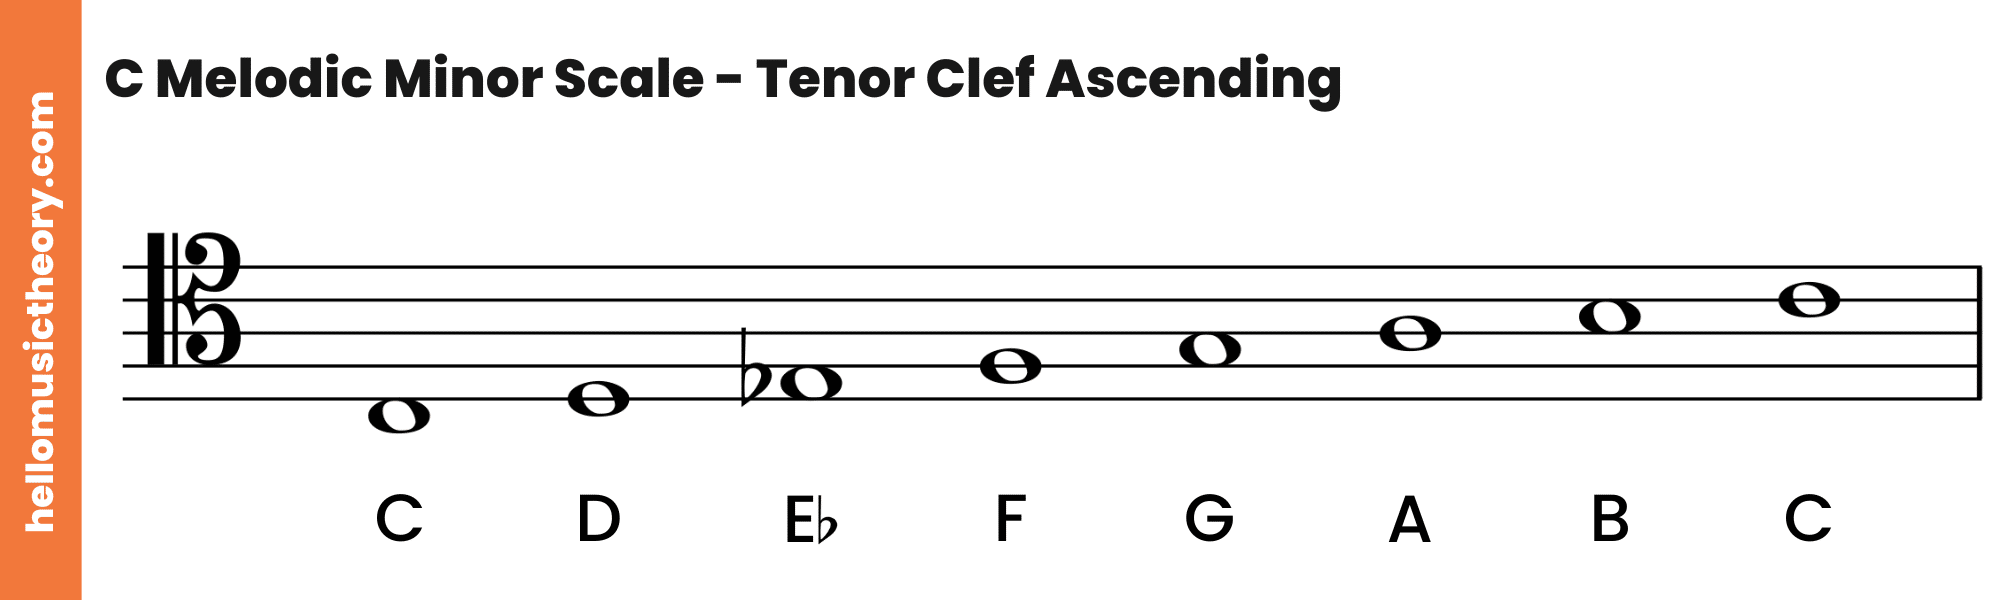 C Melodic Minor Scale Tenor Clef Ascending